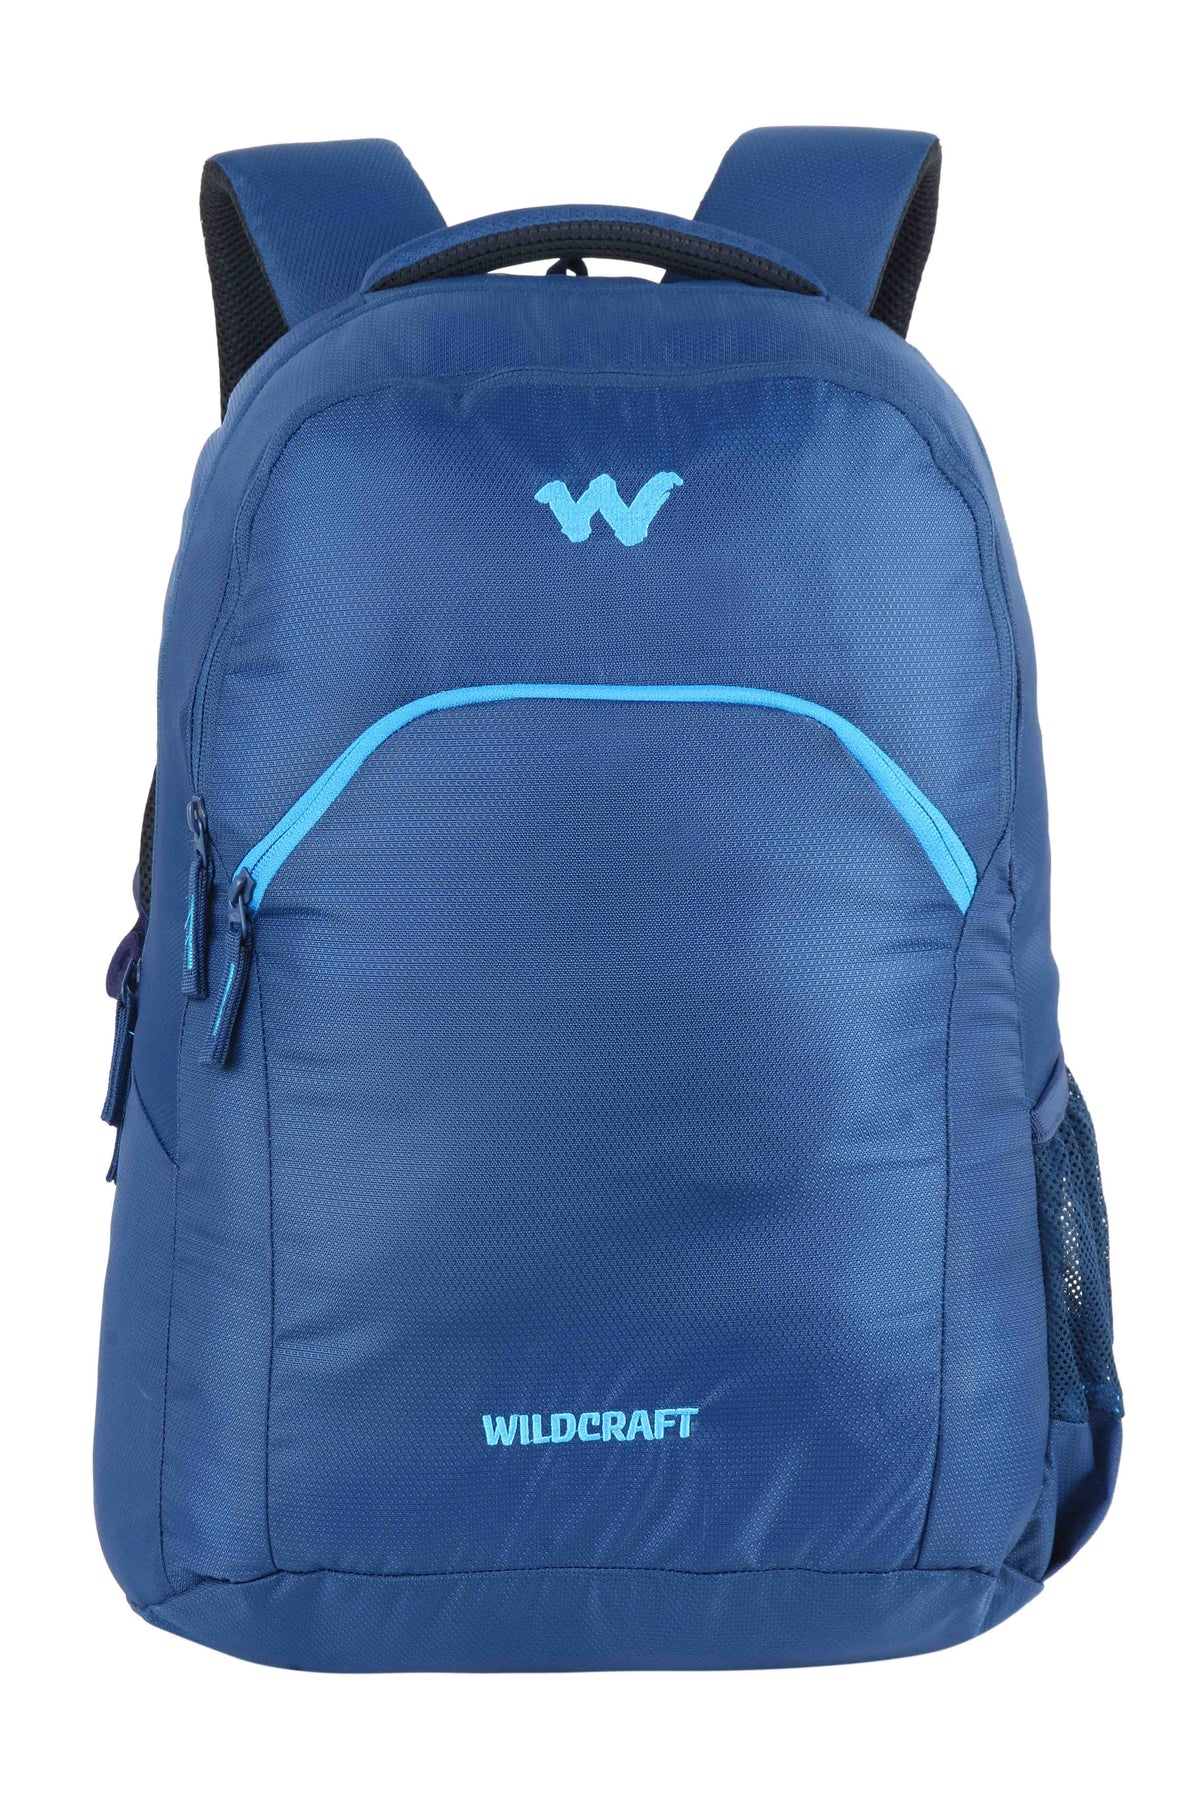 Wildcraft Ace2 Blue Lb3 18" Backpack, ACE2 BLUE